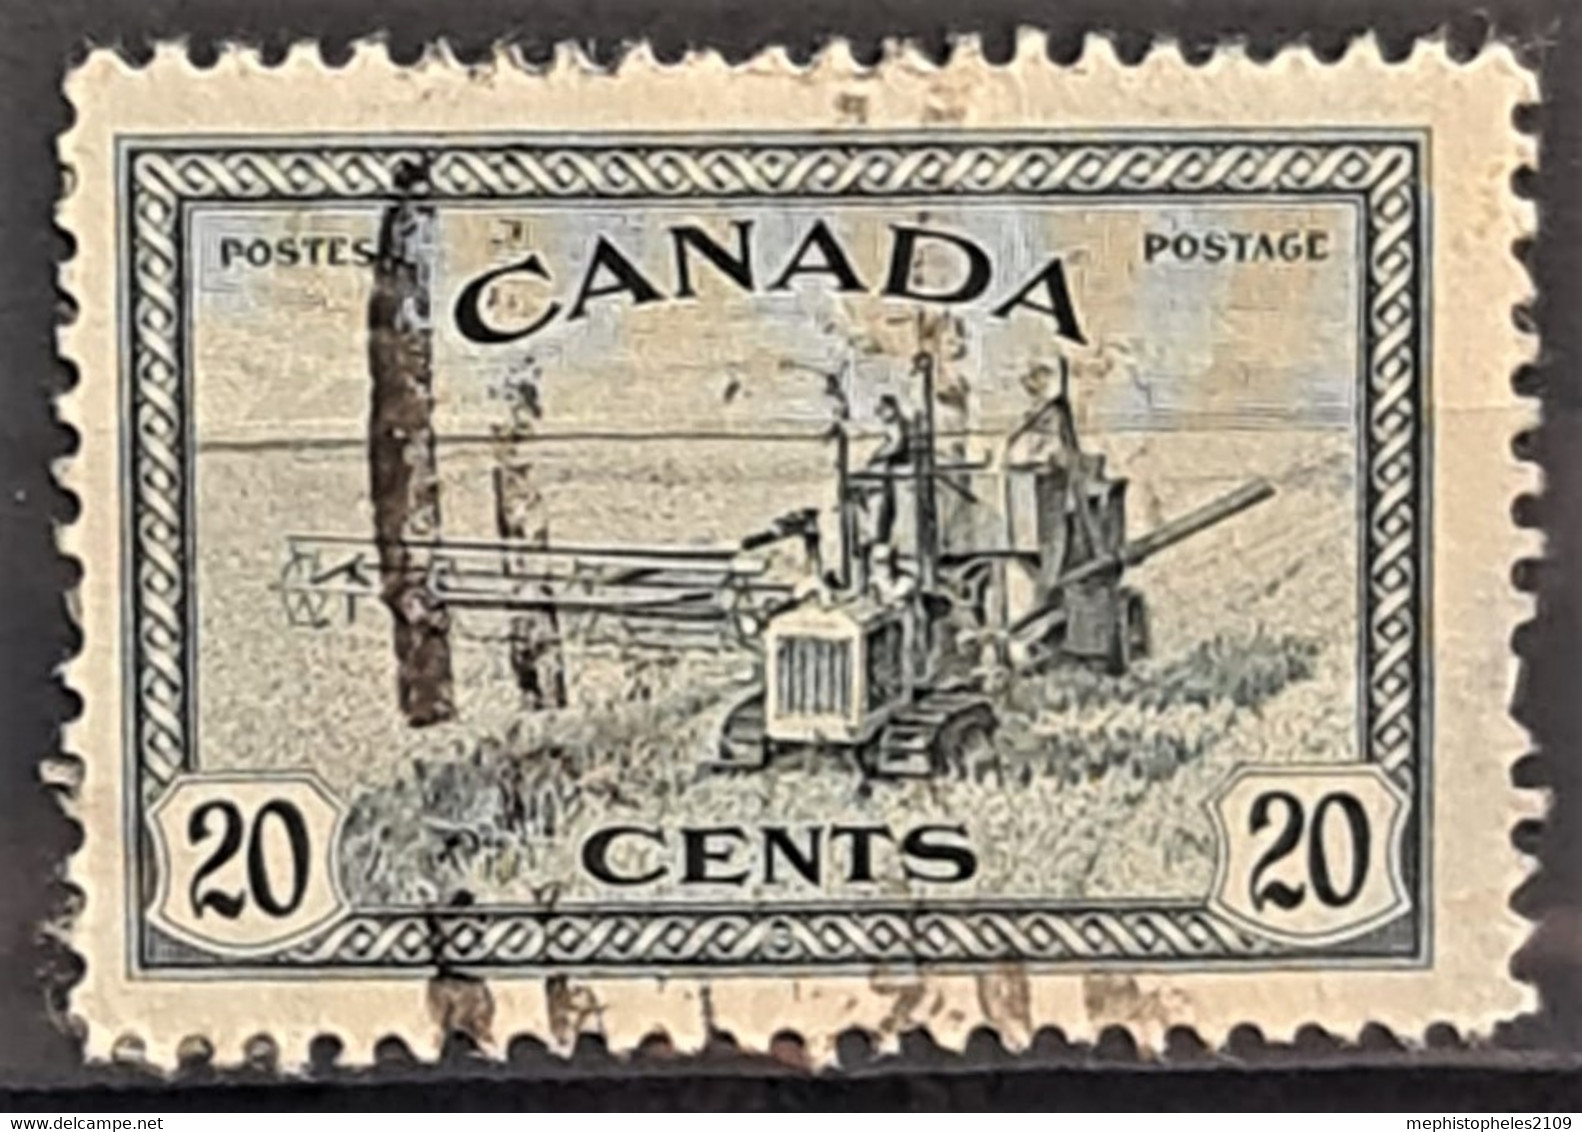 CANADA 1946 - Canceled - Sc# 271 - 20c - Gebruikt